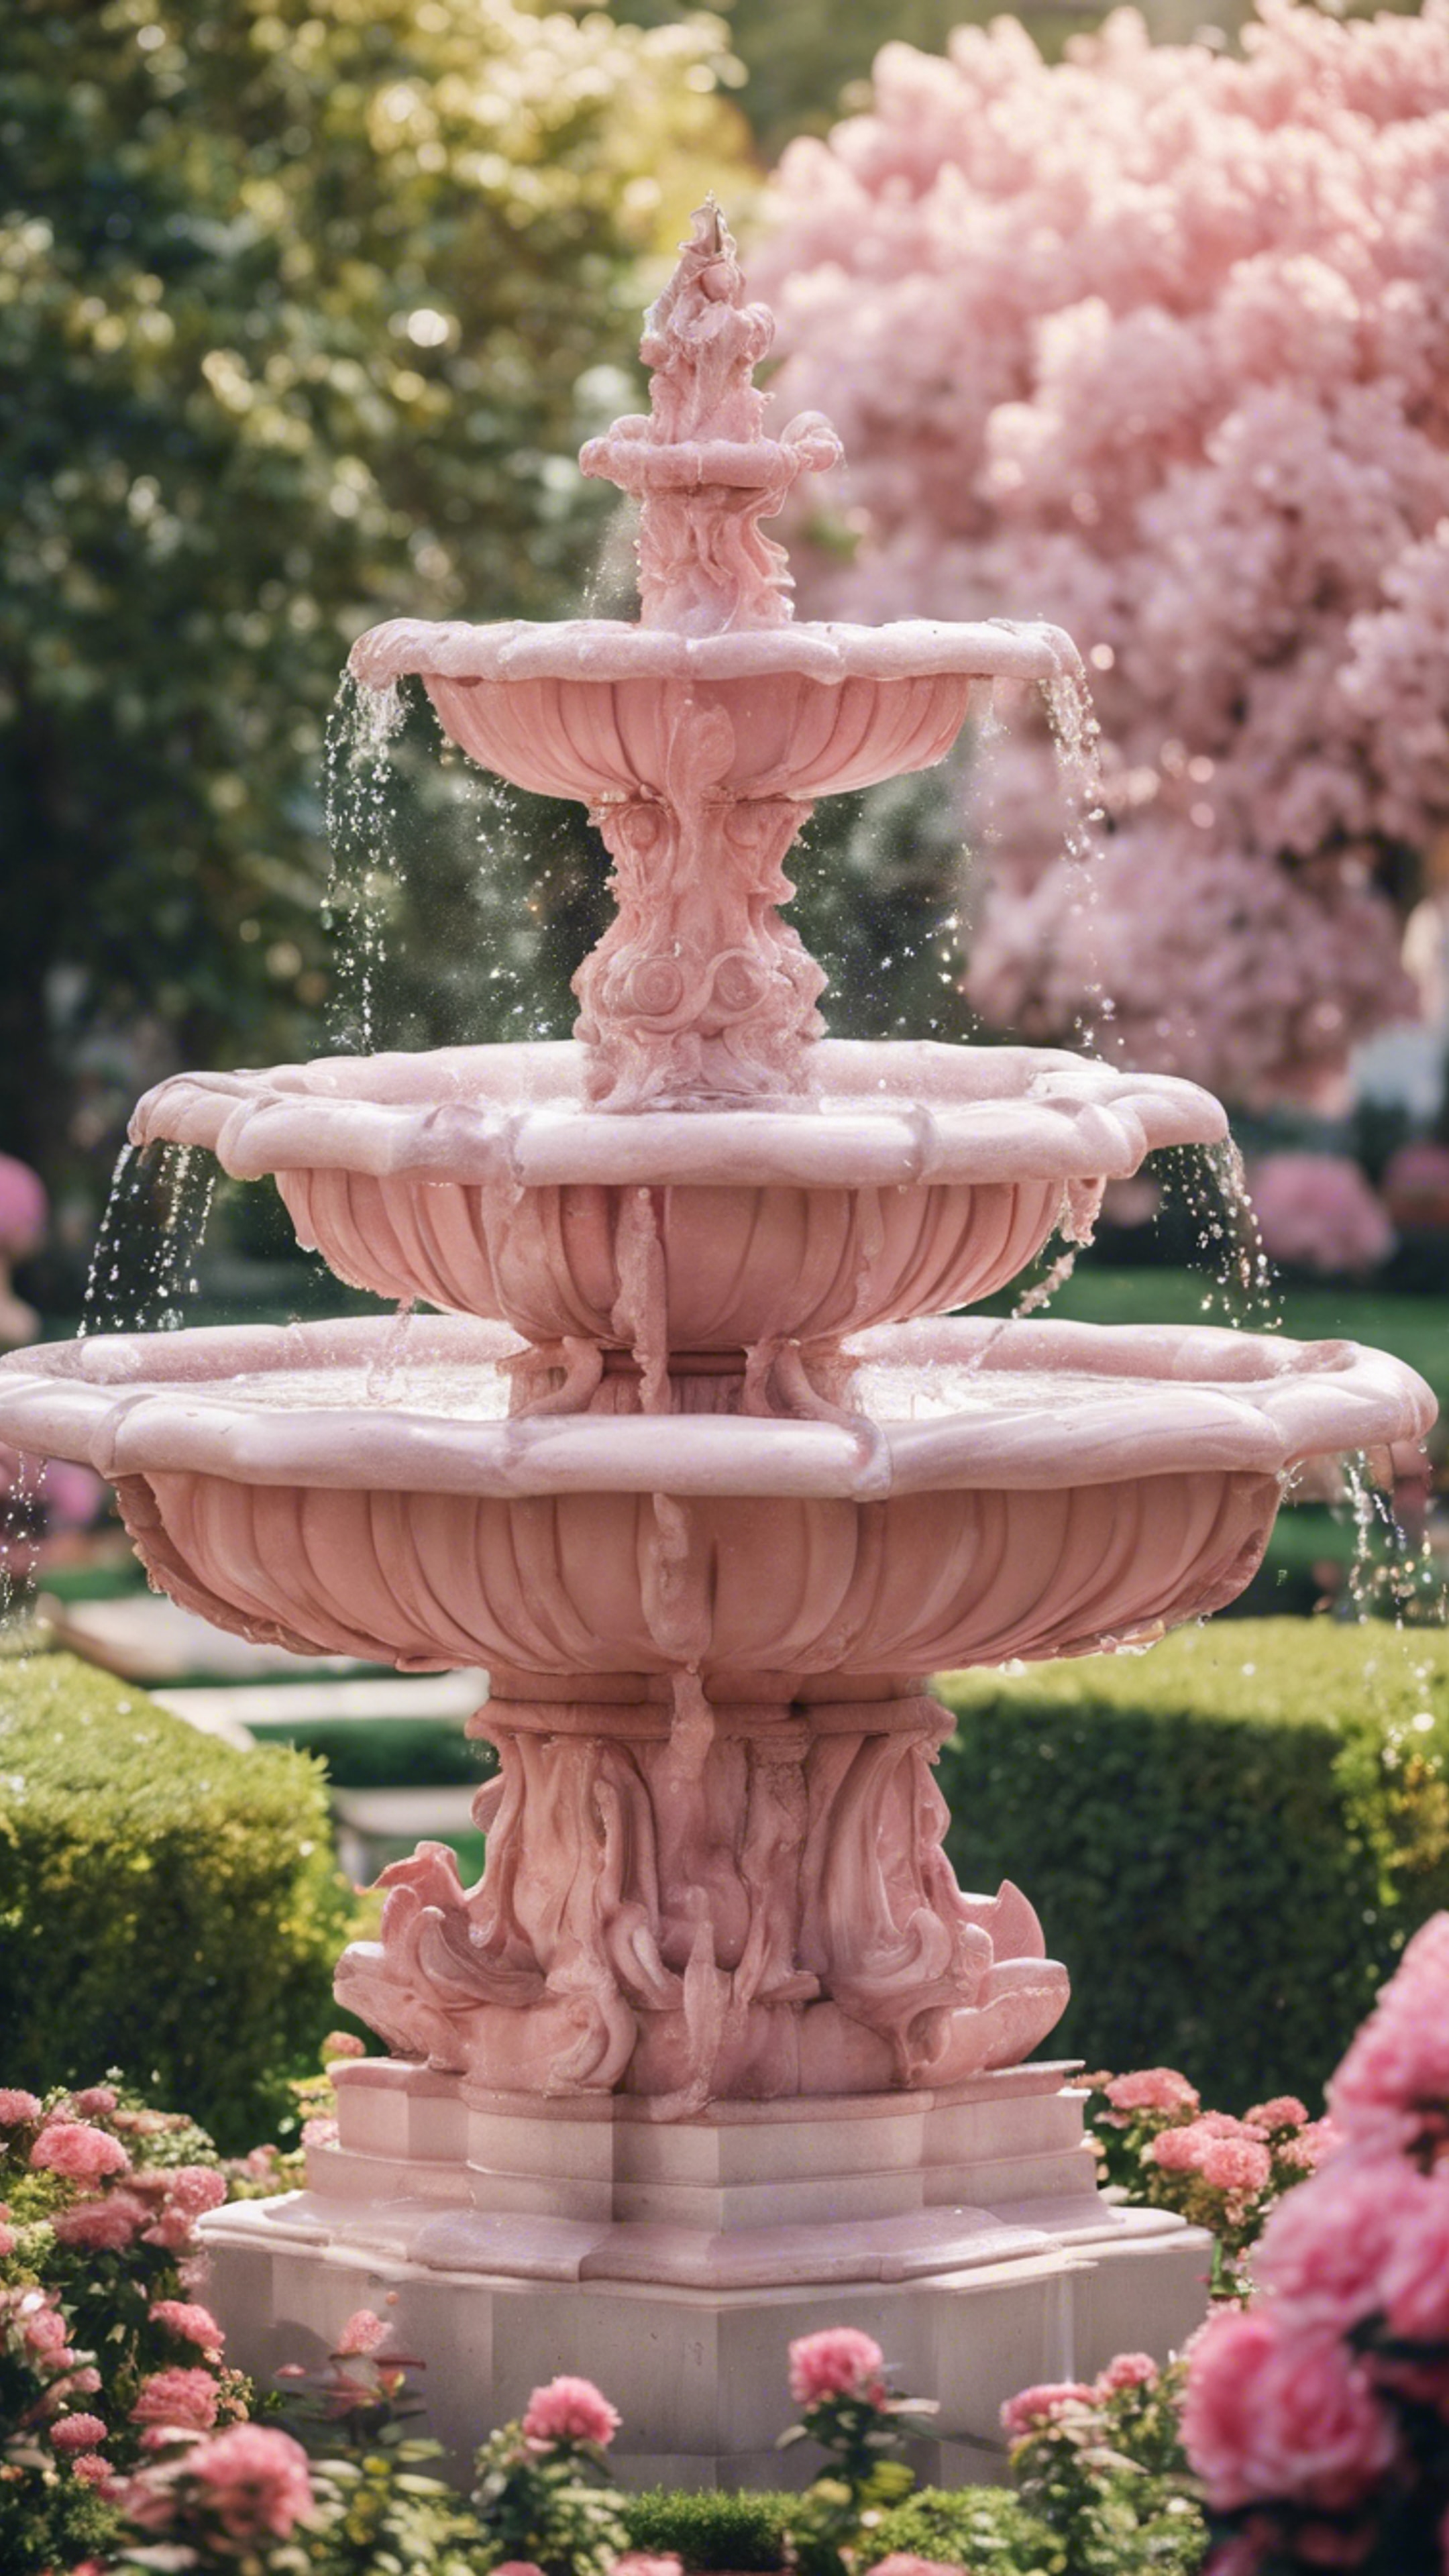 A fountain made of pink marble in an elegant flower garden. Tapeta[73b566b49d564d04a87c]